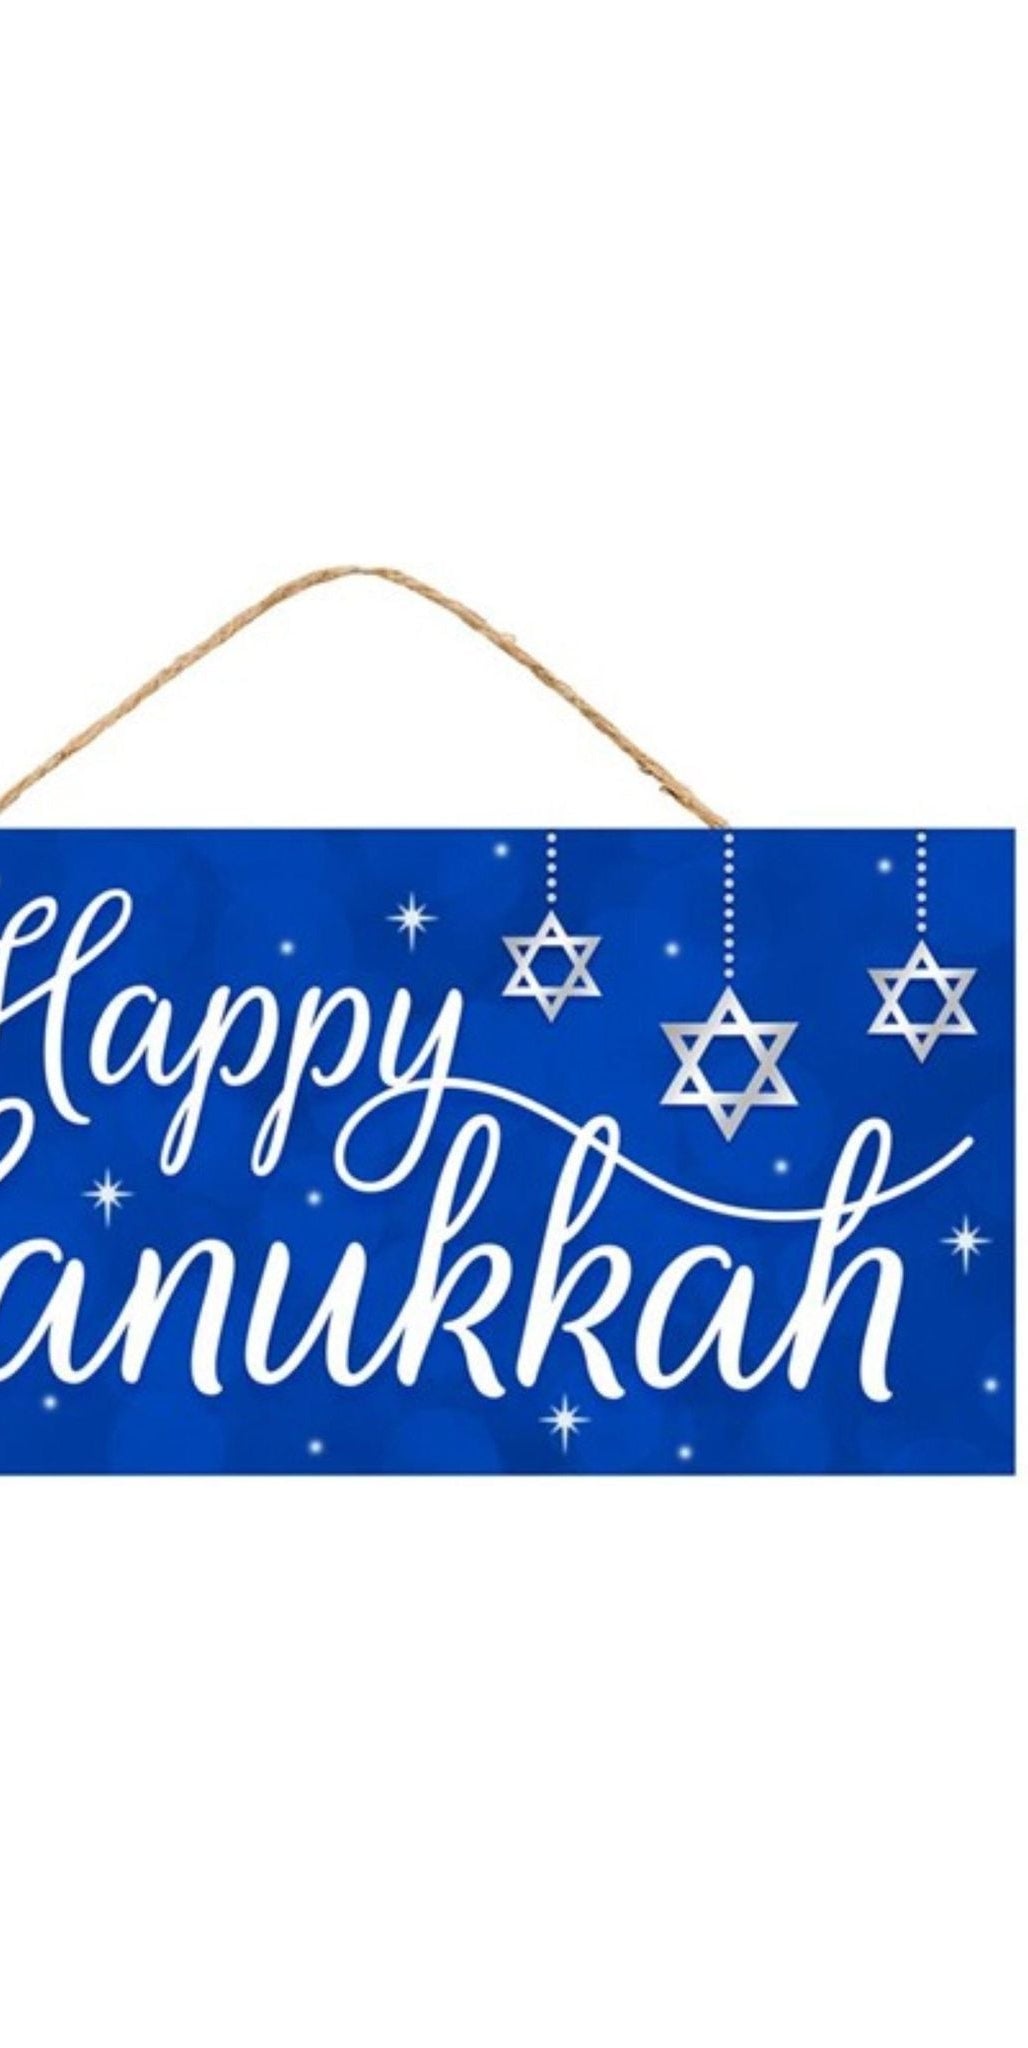 12" Wood Sign: Happy Hanukkah Blue - Michelle's aDOORable Creations - Wooden/Metal Signs